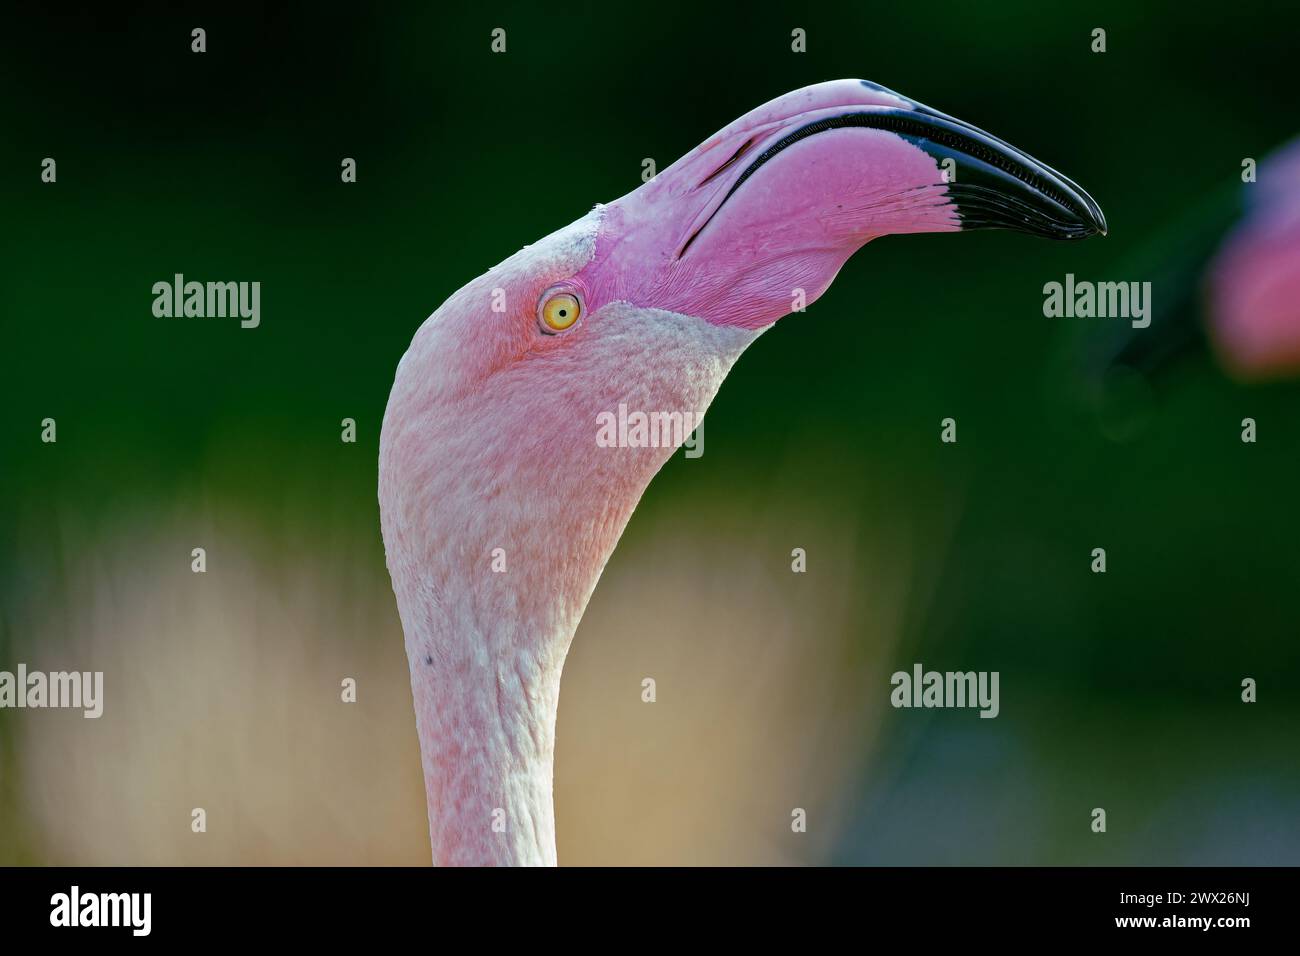 A closeup of a pink bird in sunlight Stock Photo